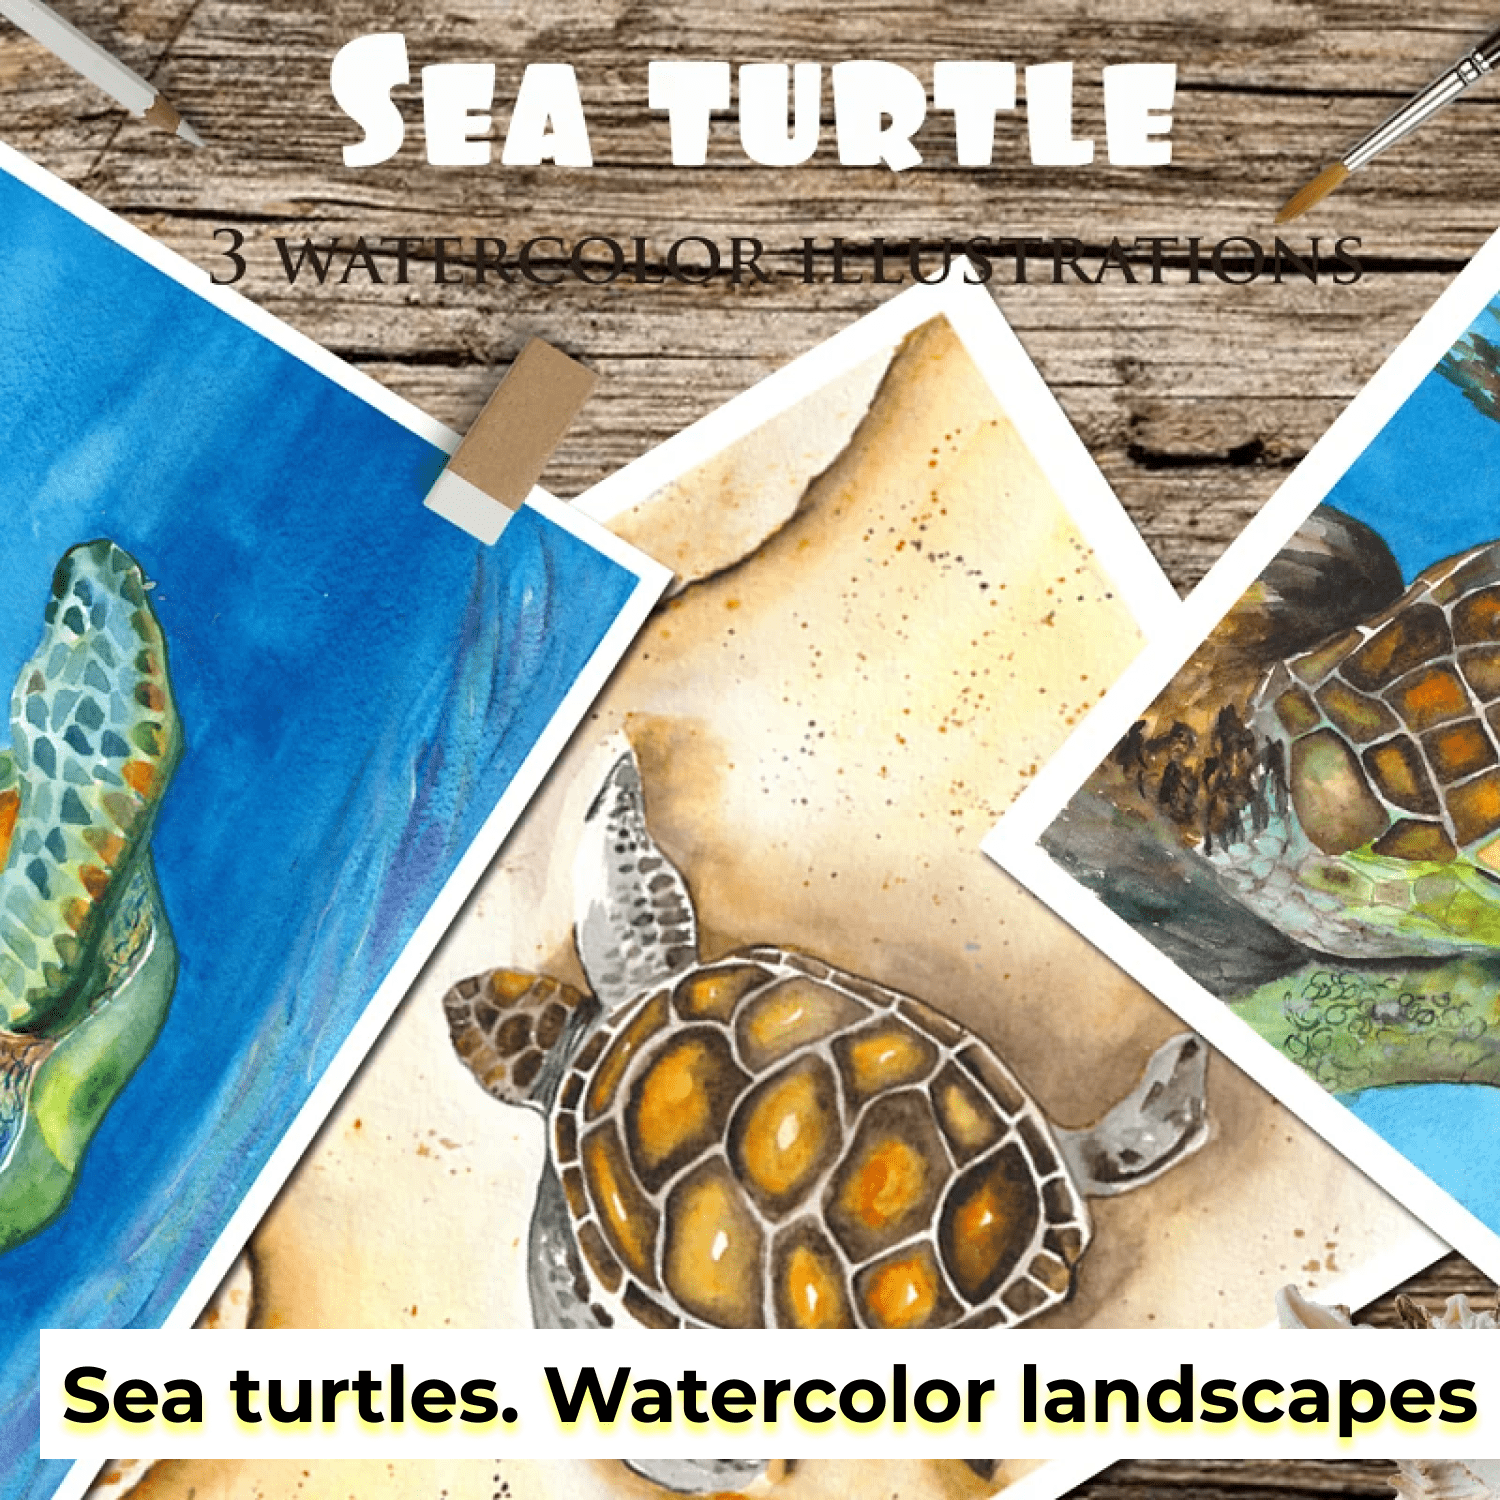 Save Sea turtles. Watercolor landscapes.